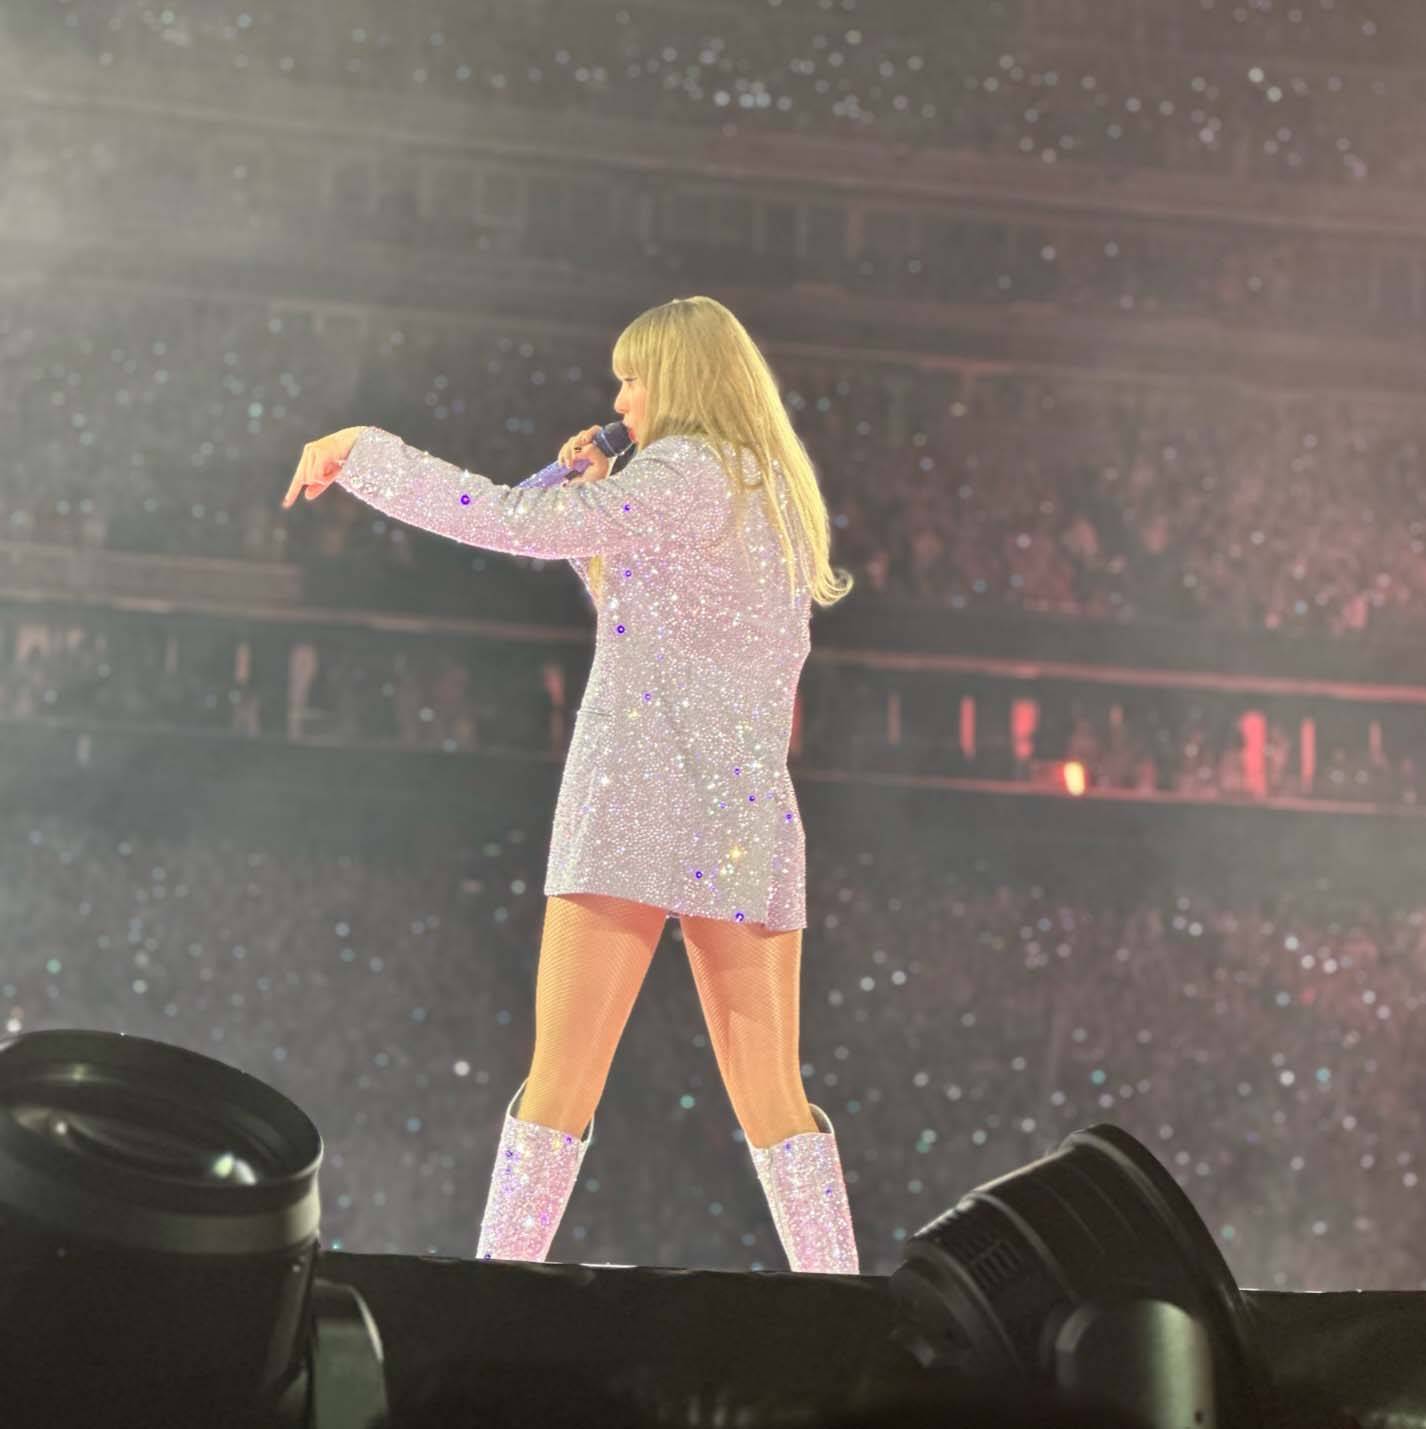 Taylor Swift performing at NRG Stadium - The Eras Tour 2023